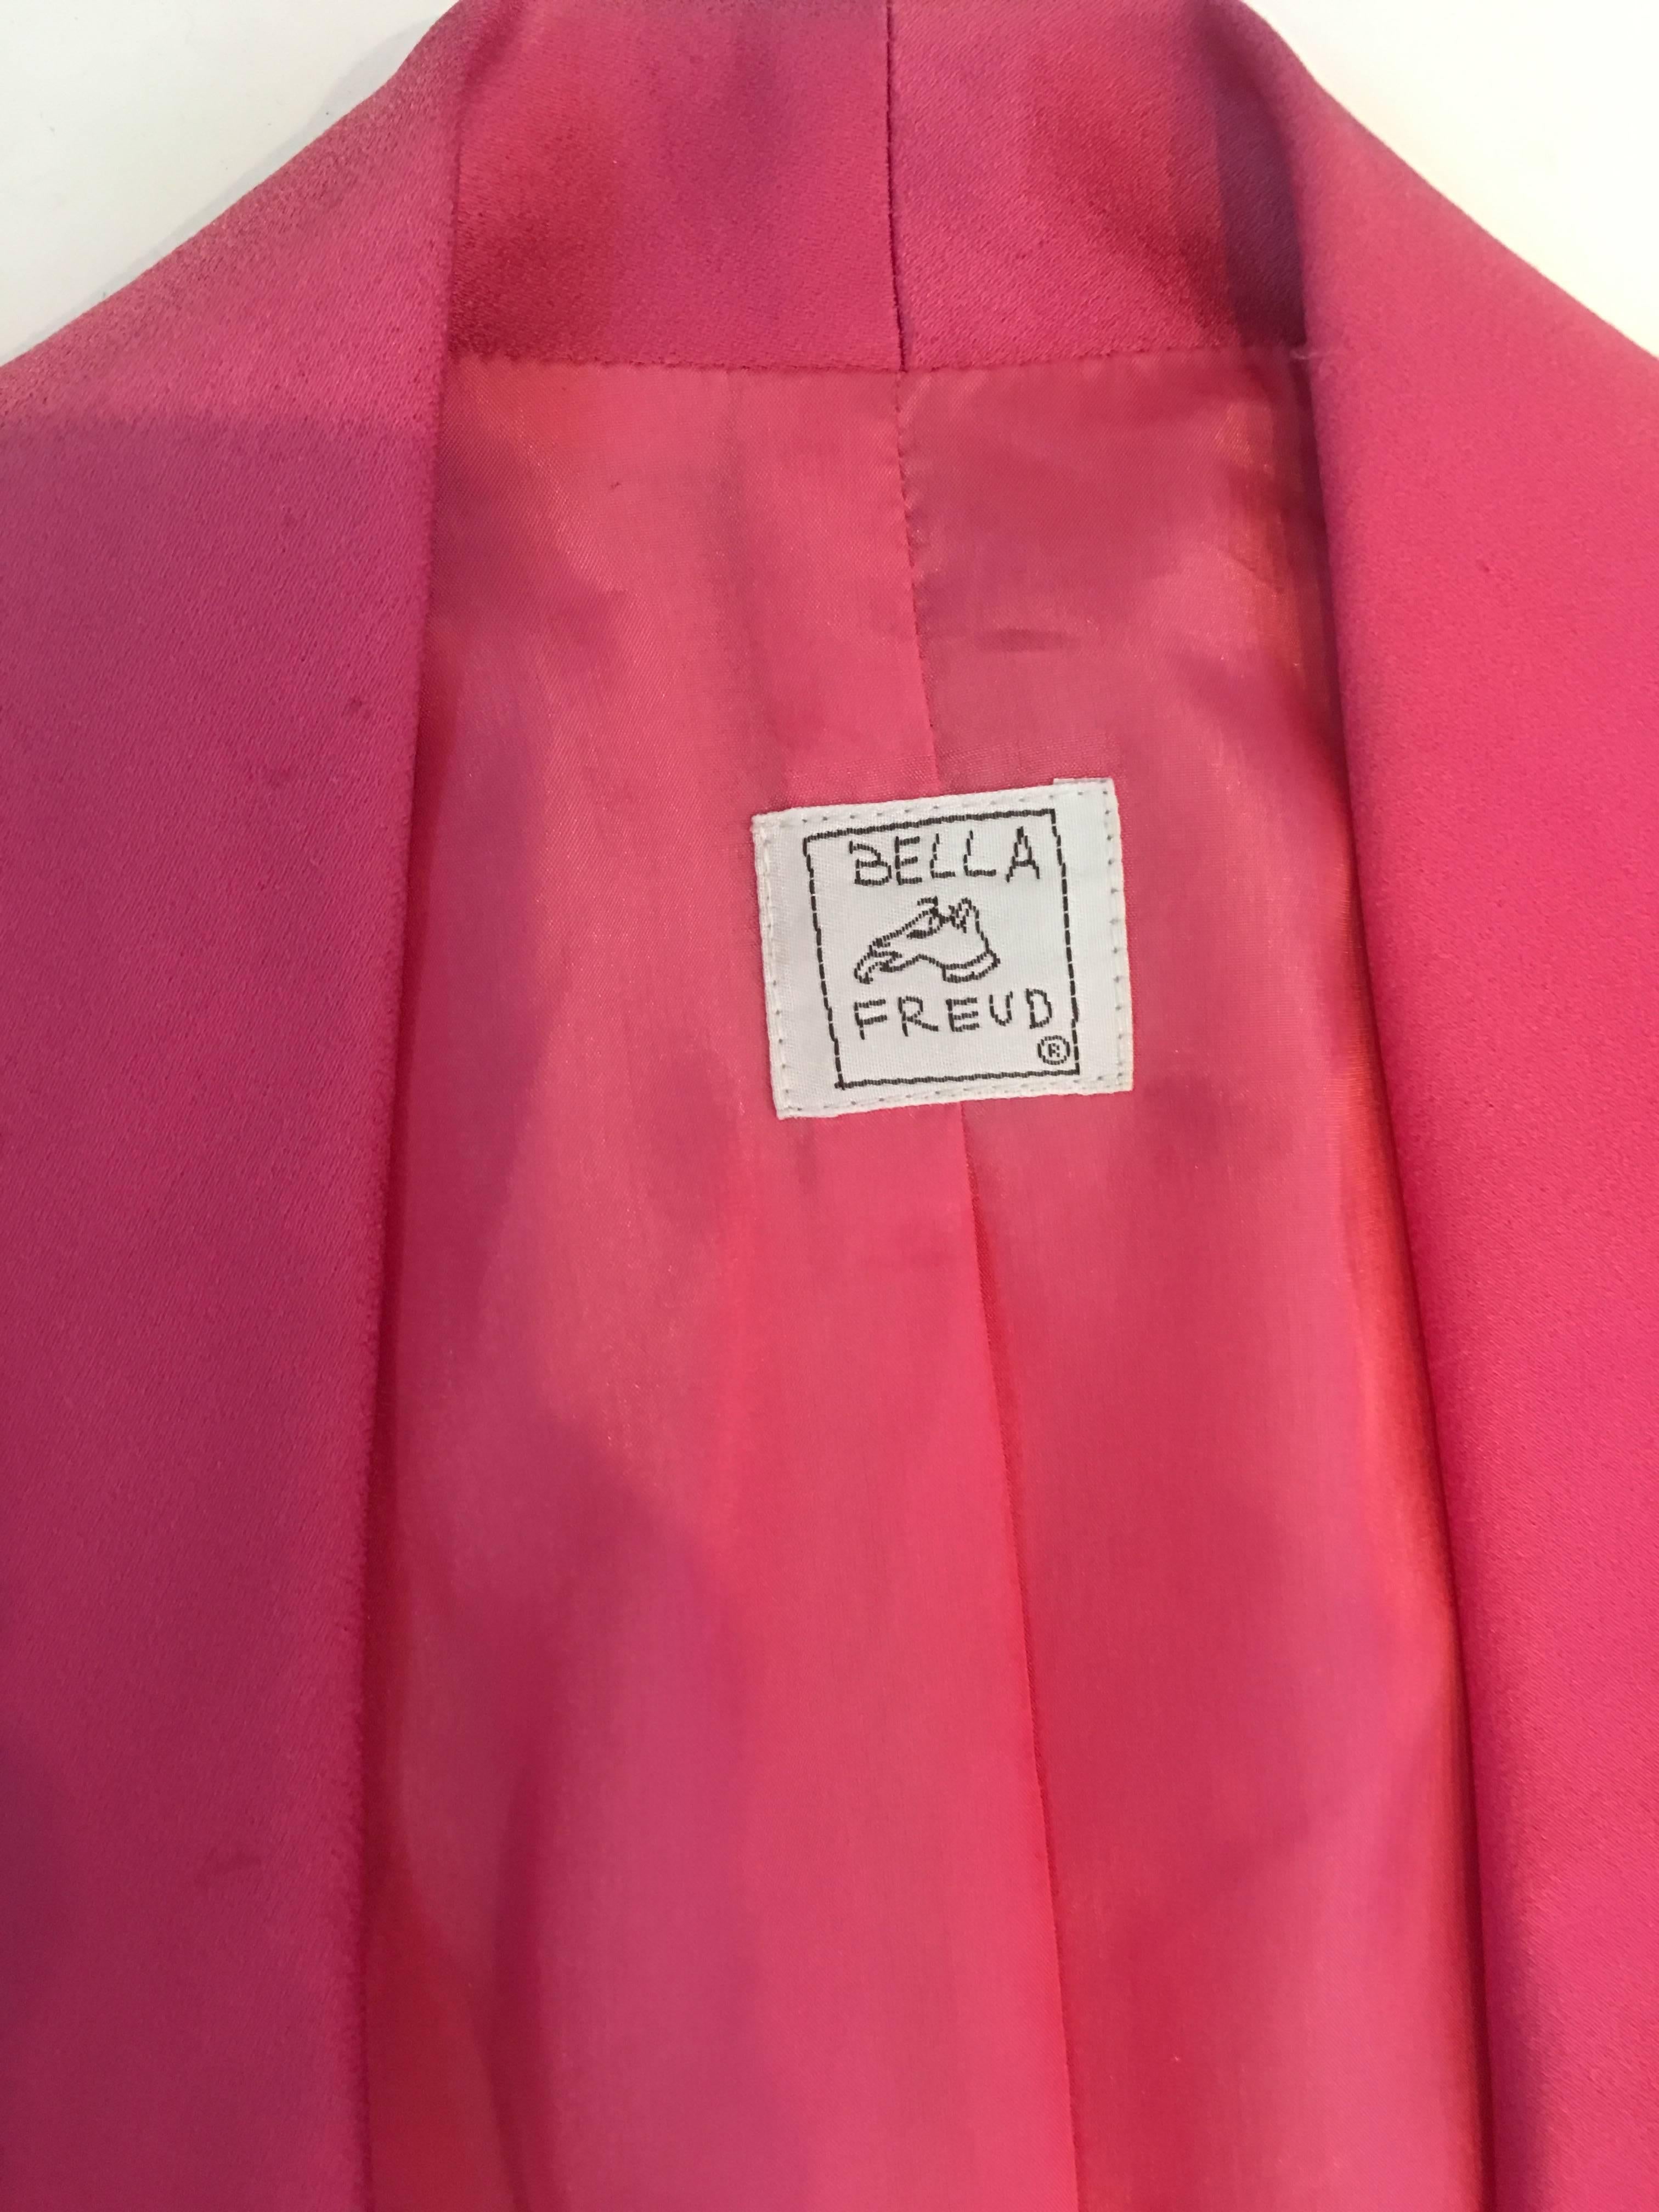 Bella Frued Pink Tux Style Jacket 2